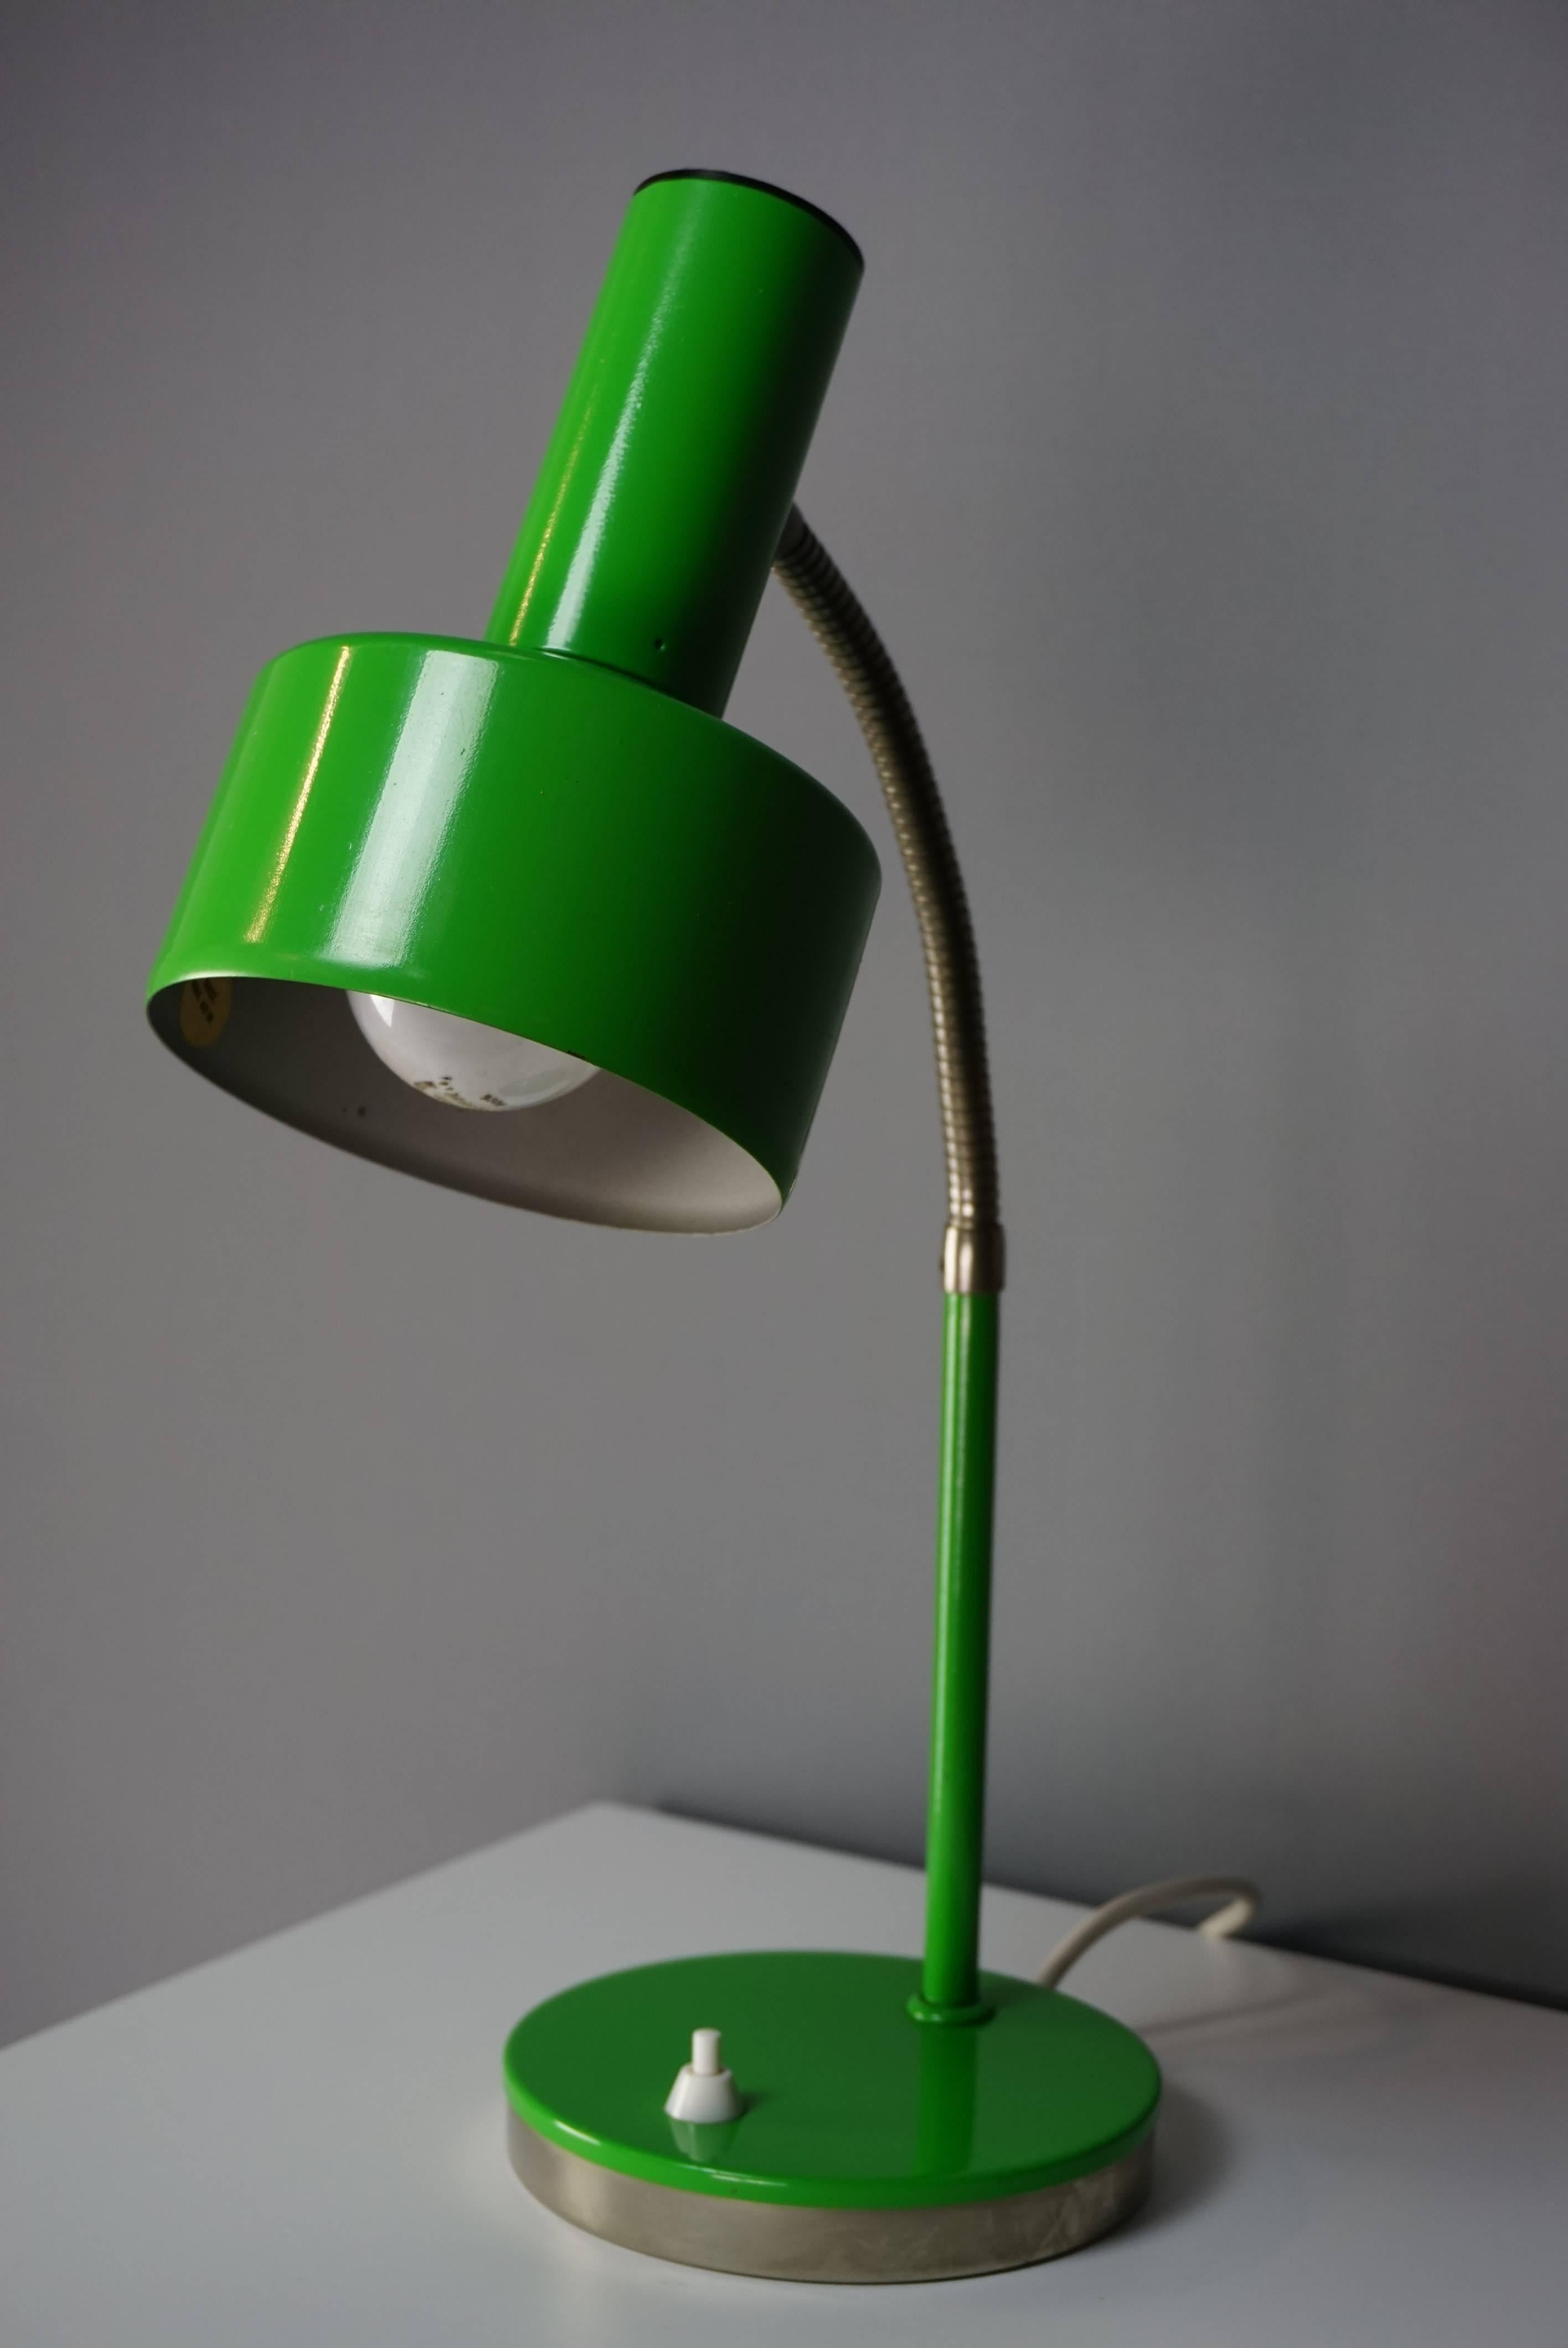 Midcentury Green Metal Articulated Lamp 1960s Design 2